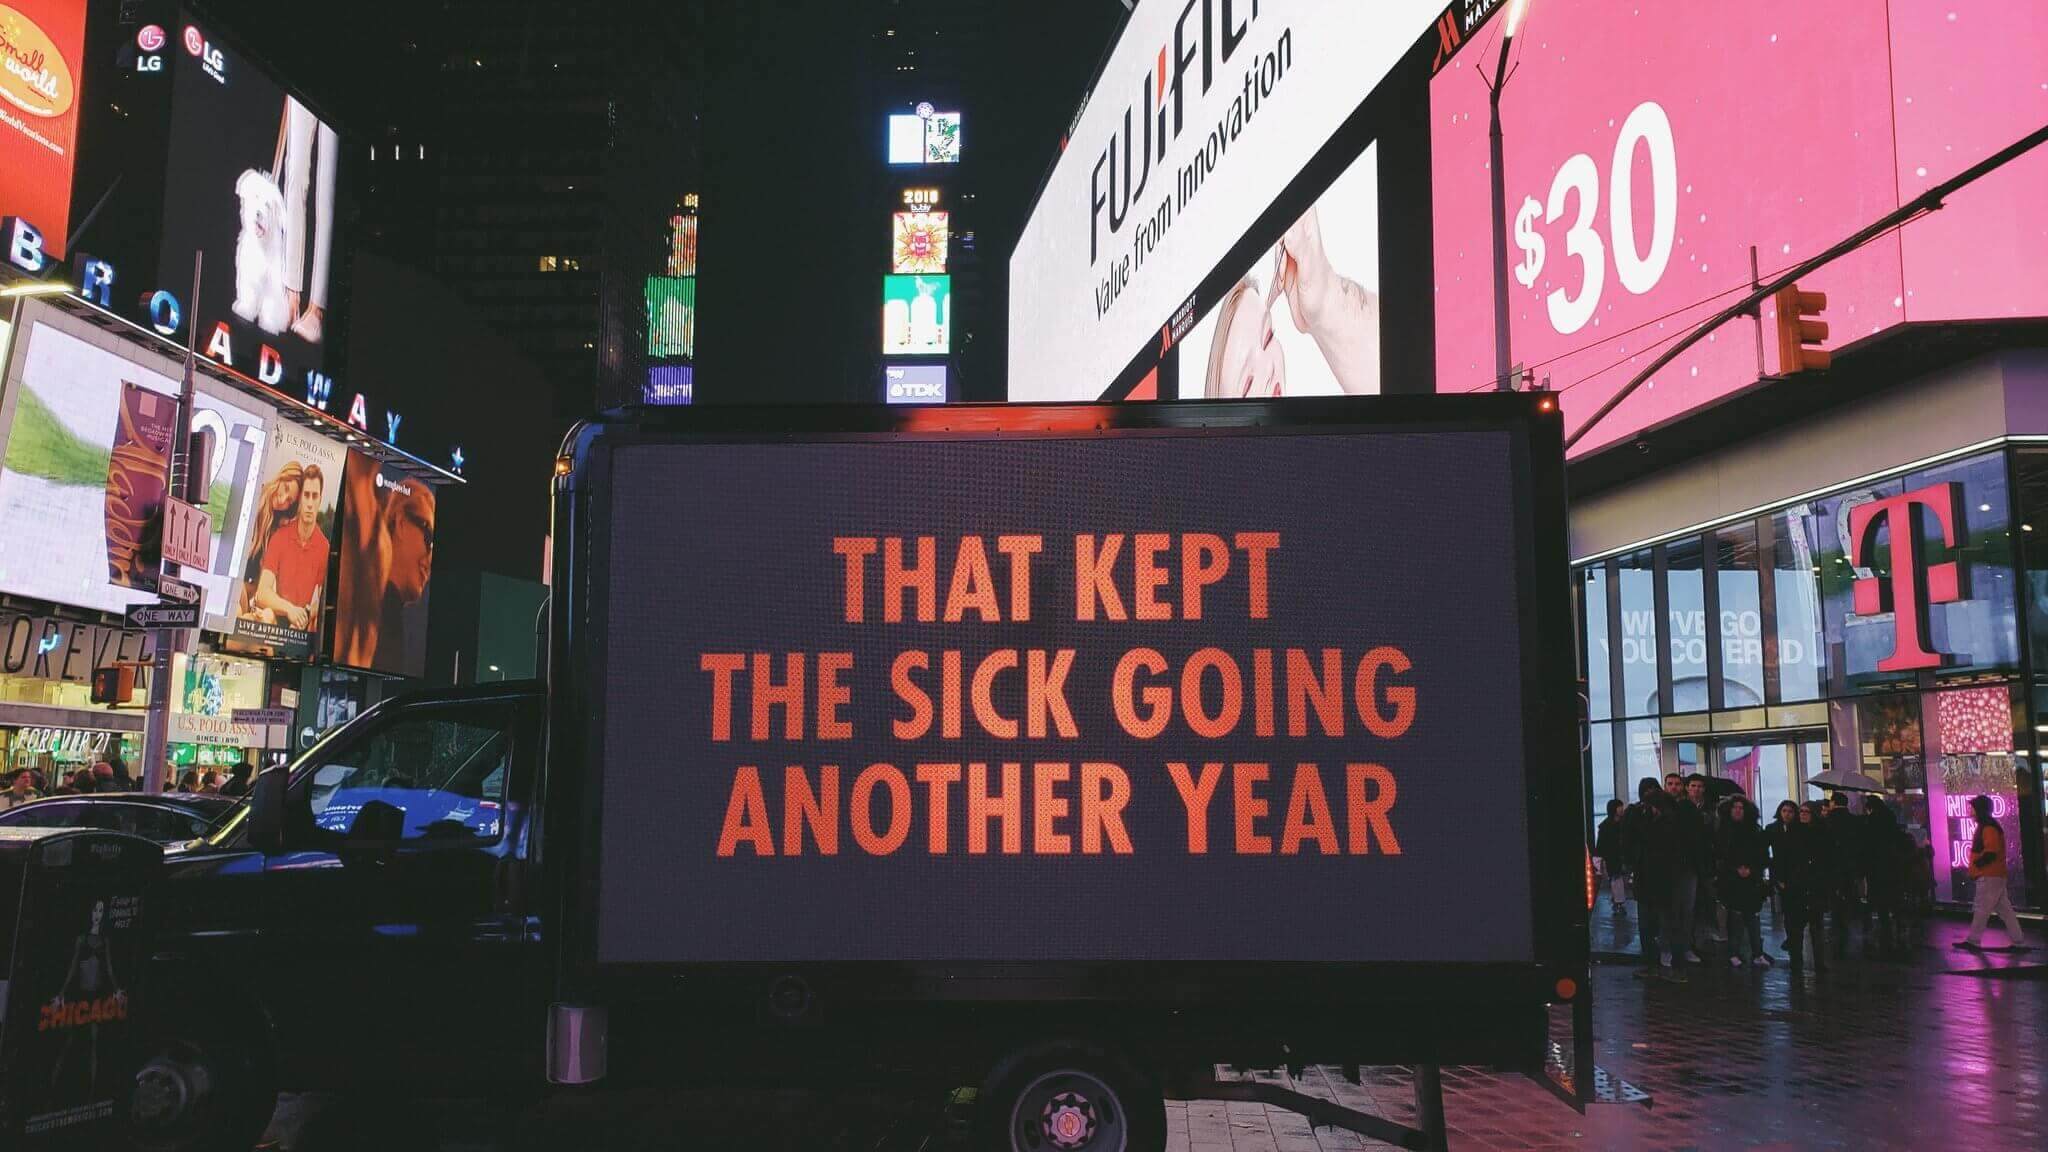 Interactive billboard in Time Square